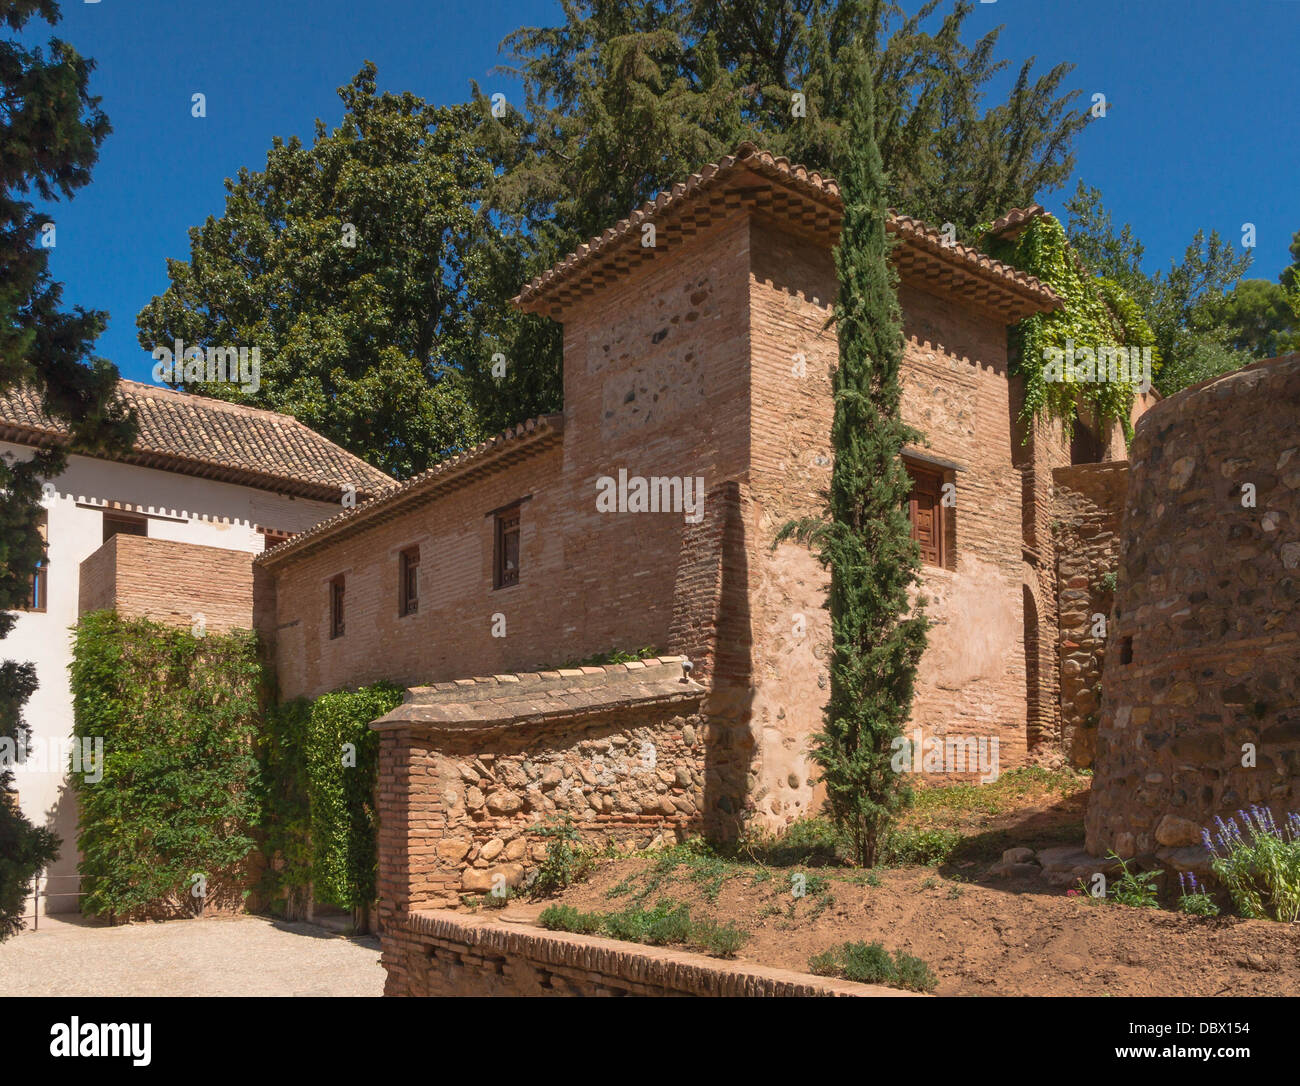 Ancient arab building, 15th-century, Generalife, Granada, Spain. Stock Photo